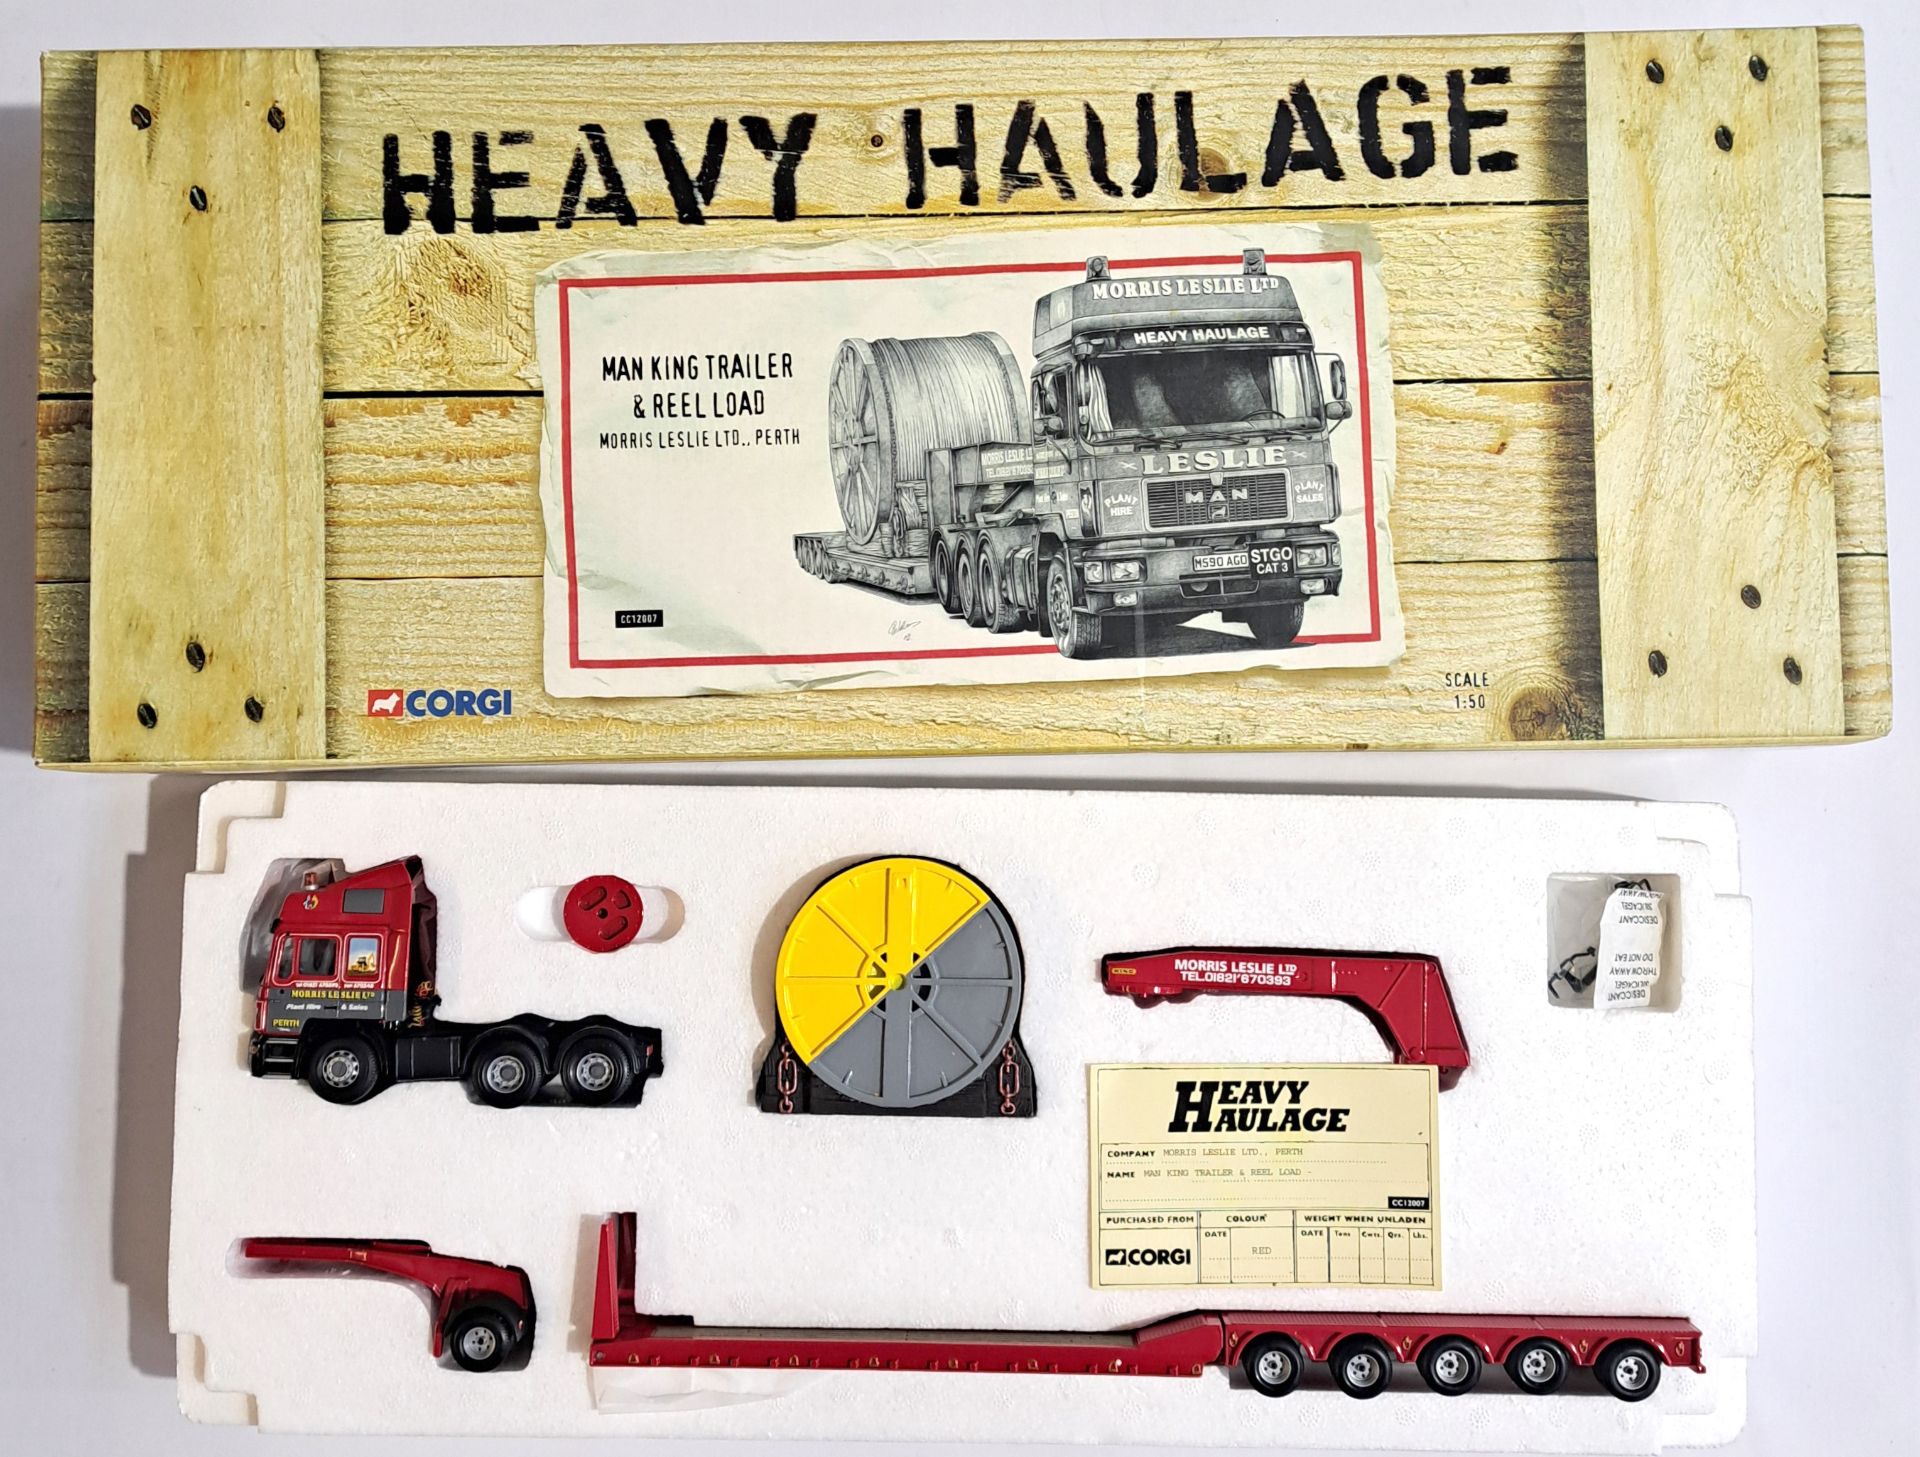 Corgi "Heavy Haulage" a boxed CC12007